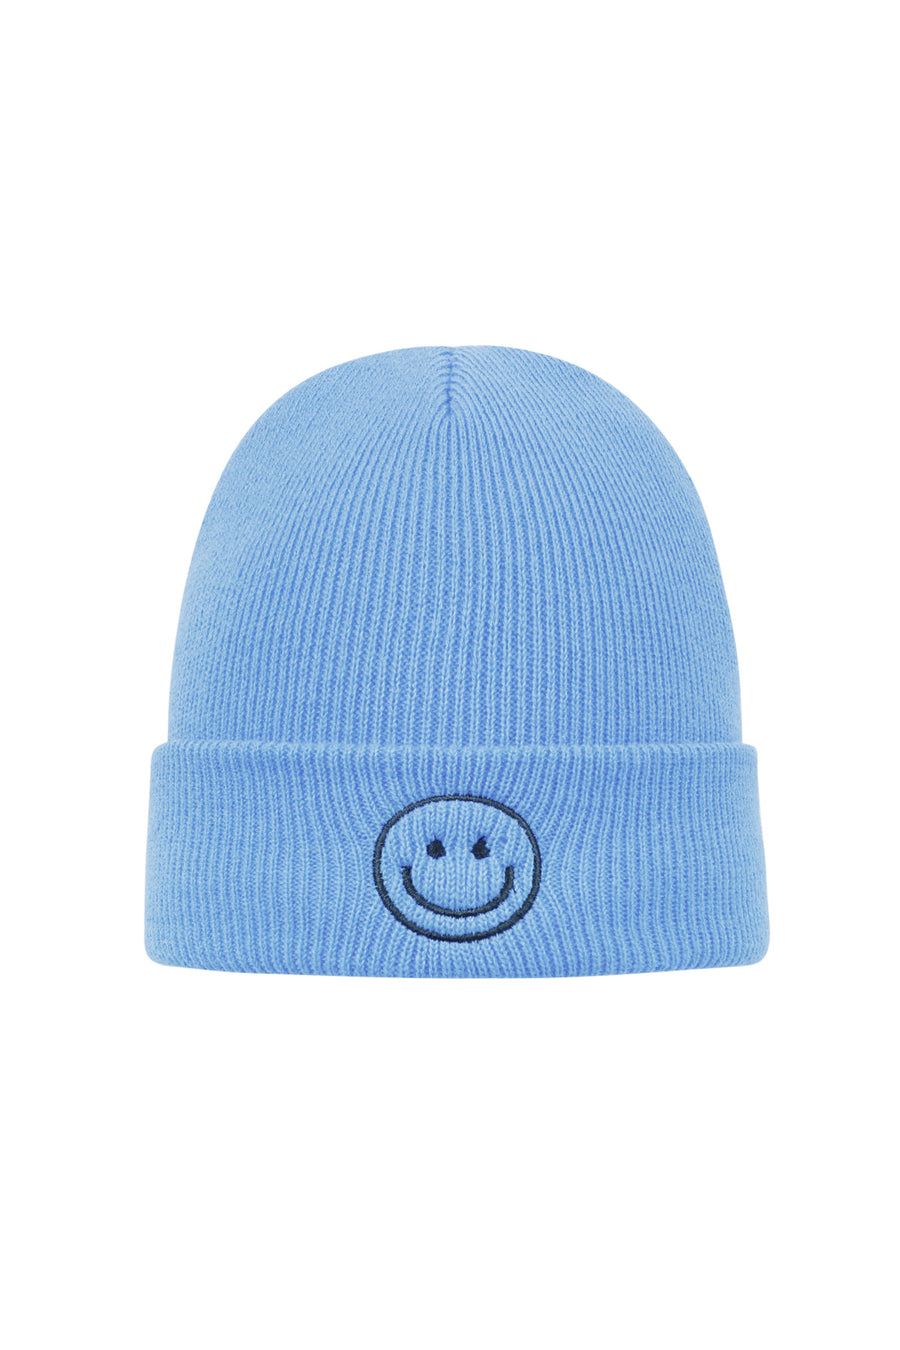 Smiley Beanie Hat - Blue